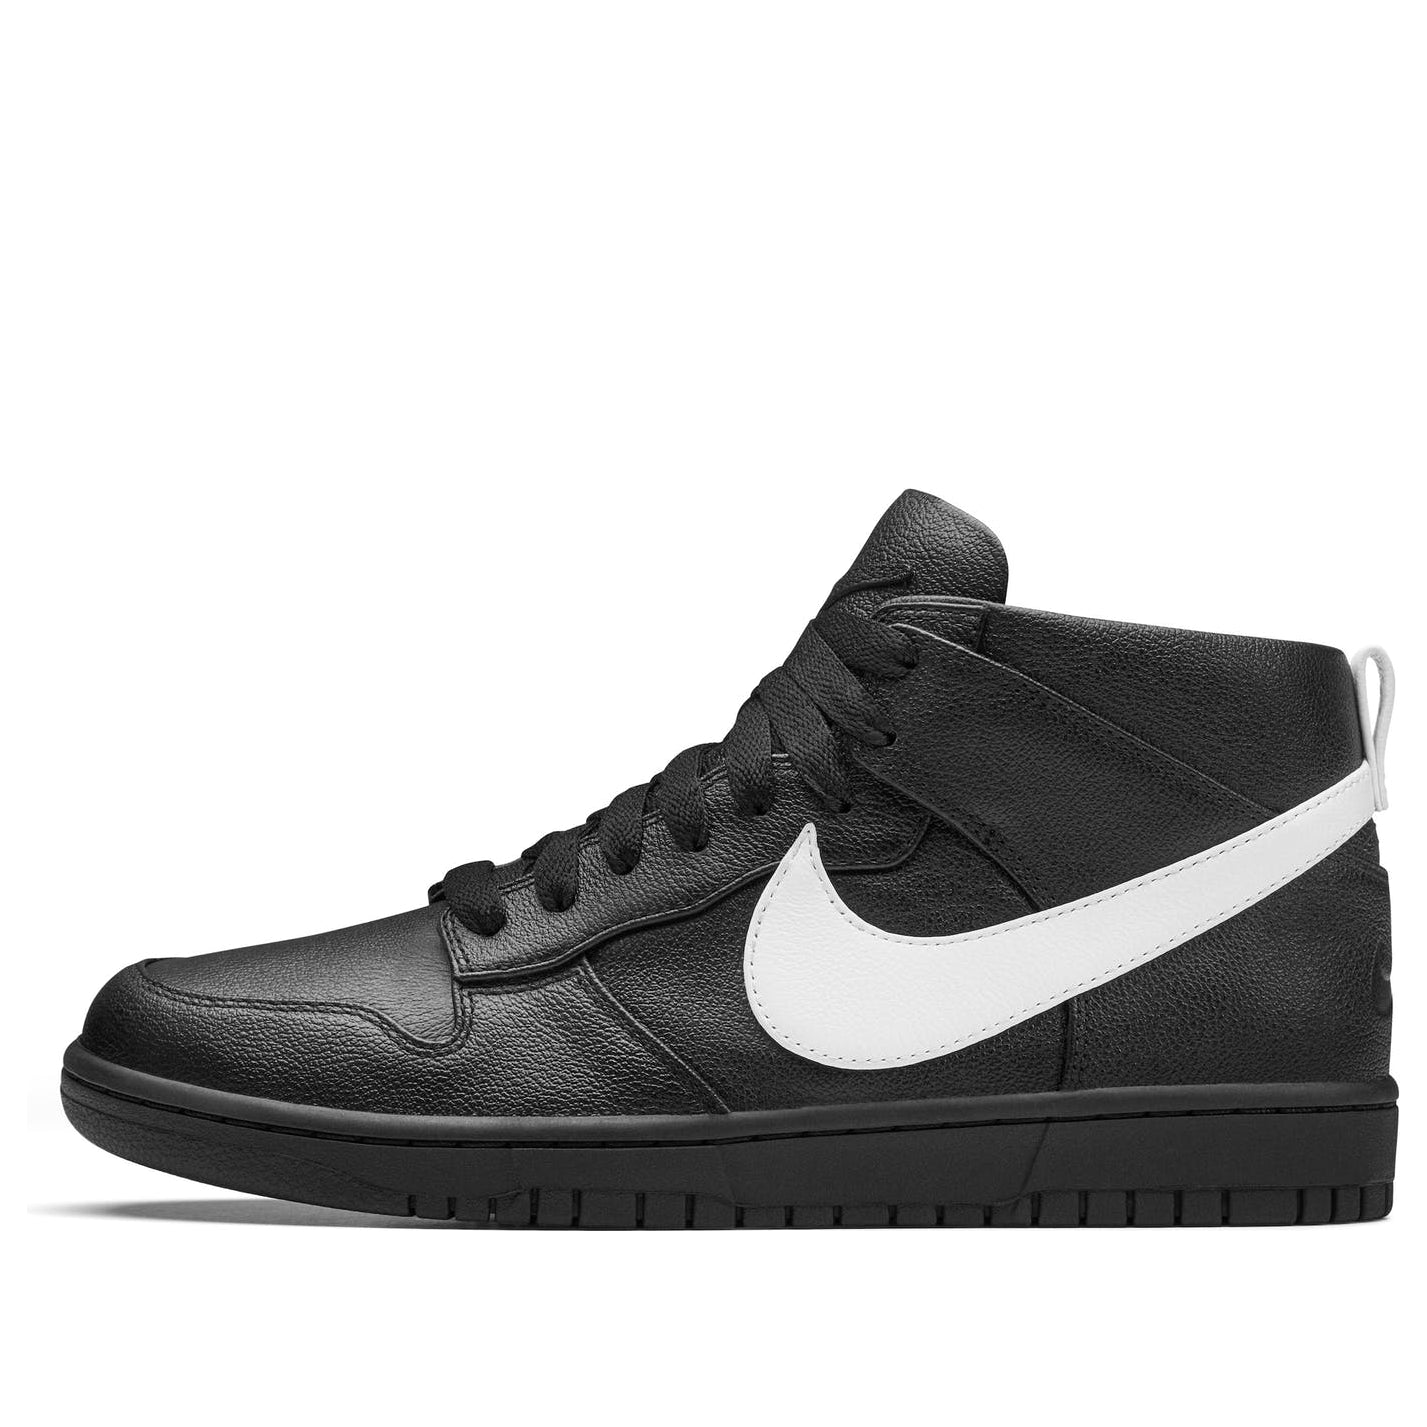 Riccardo Tisci x NikeLab Dunk Lux Chukka 'Black'  910088-001 Signature Shoe